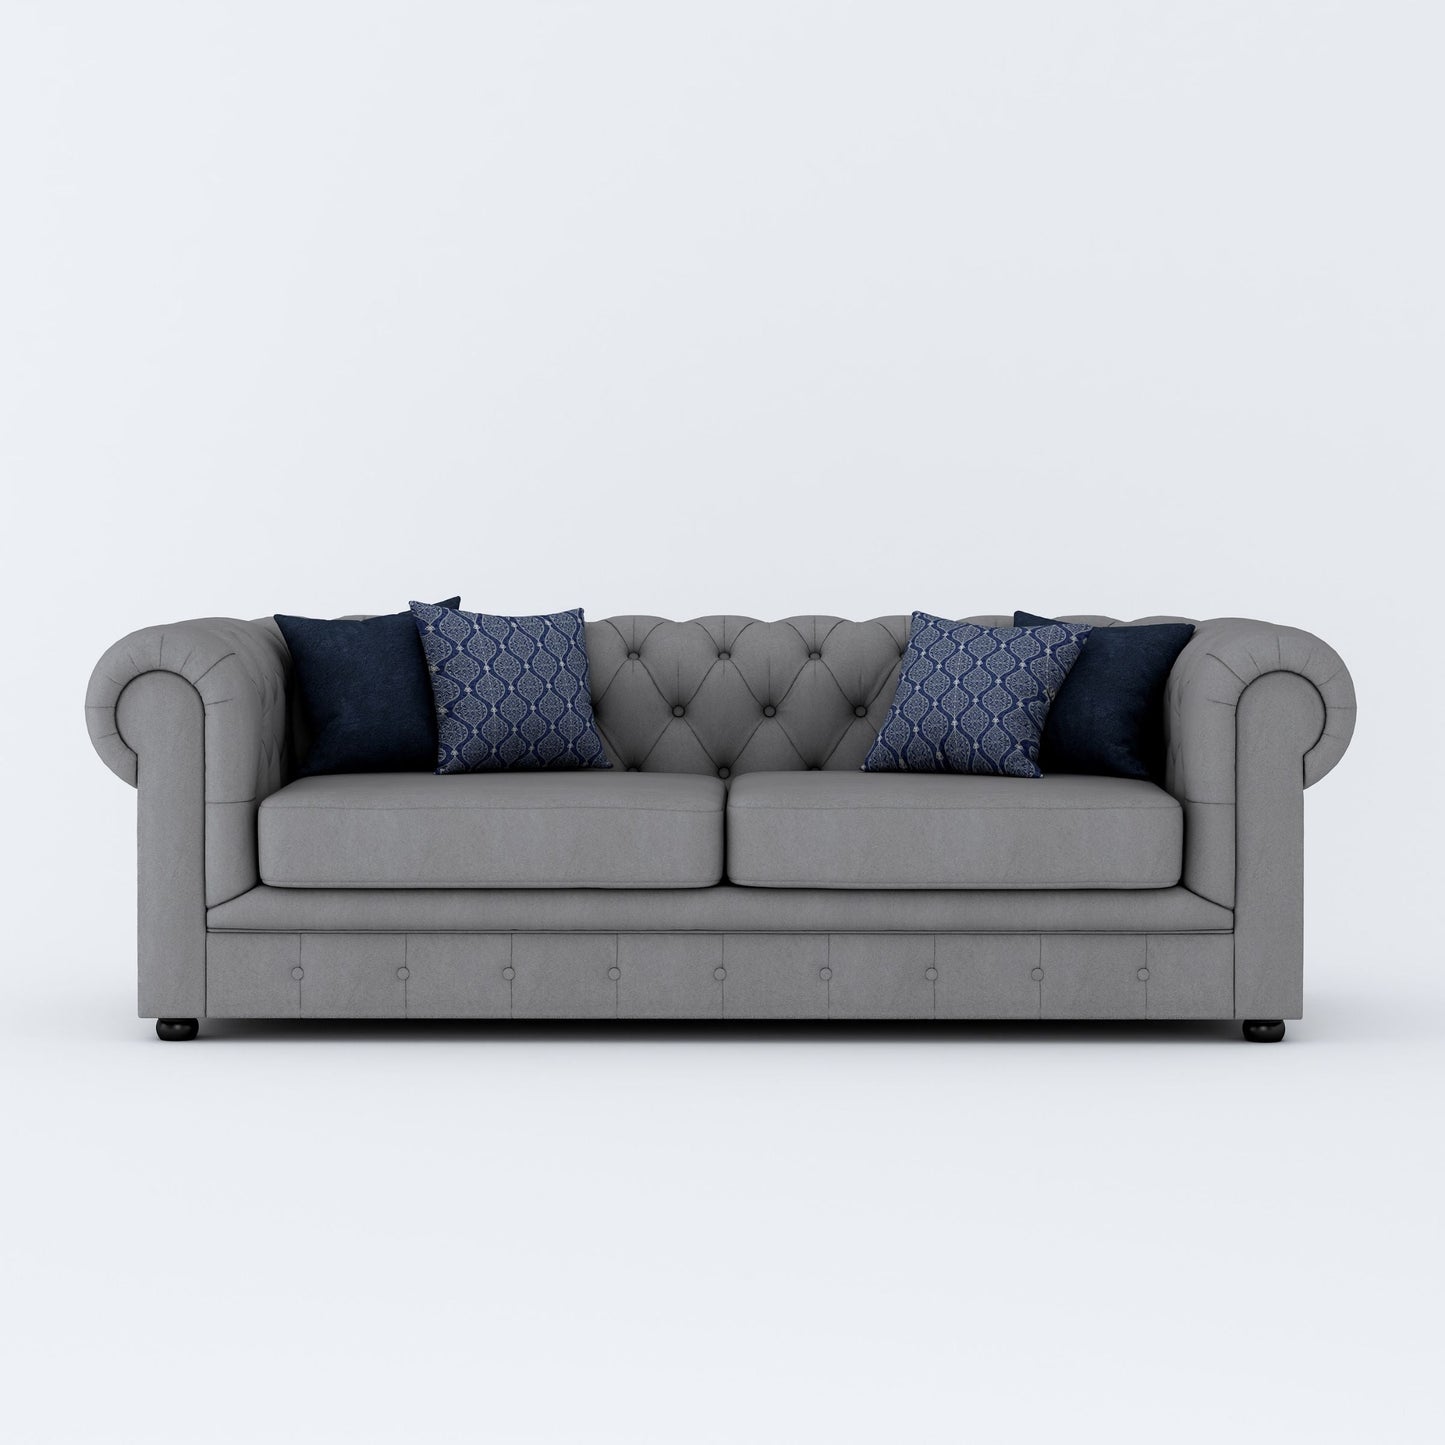 Wilson 3 Seater Chesterfield Sofa Light Grey